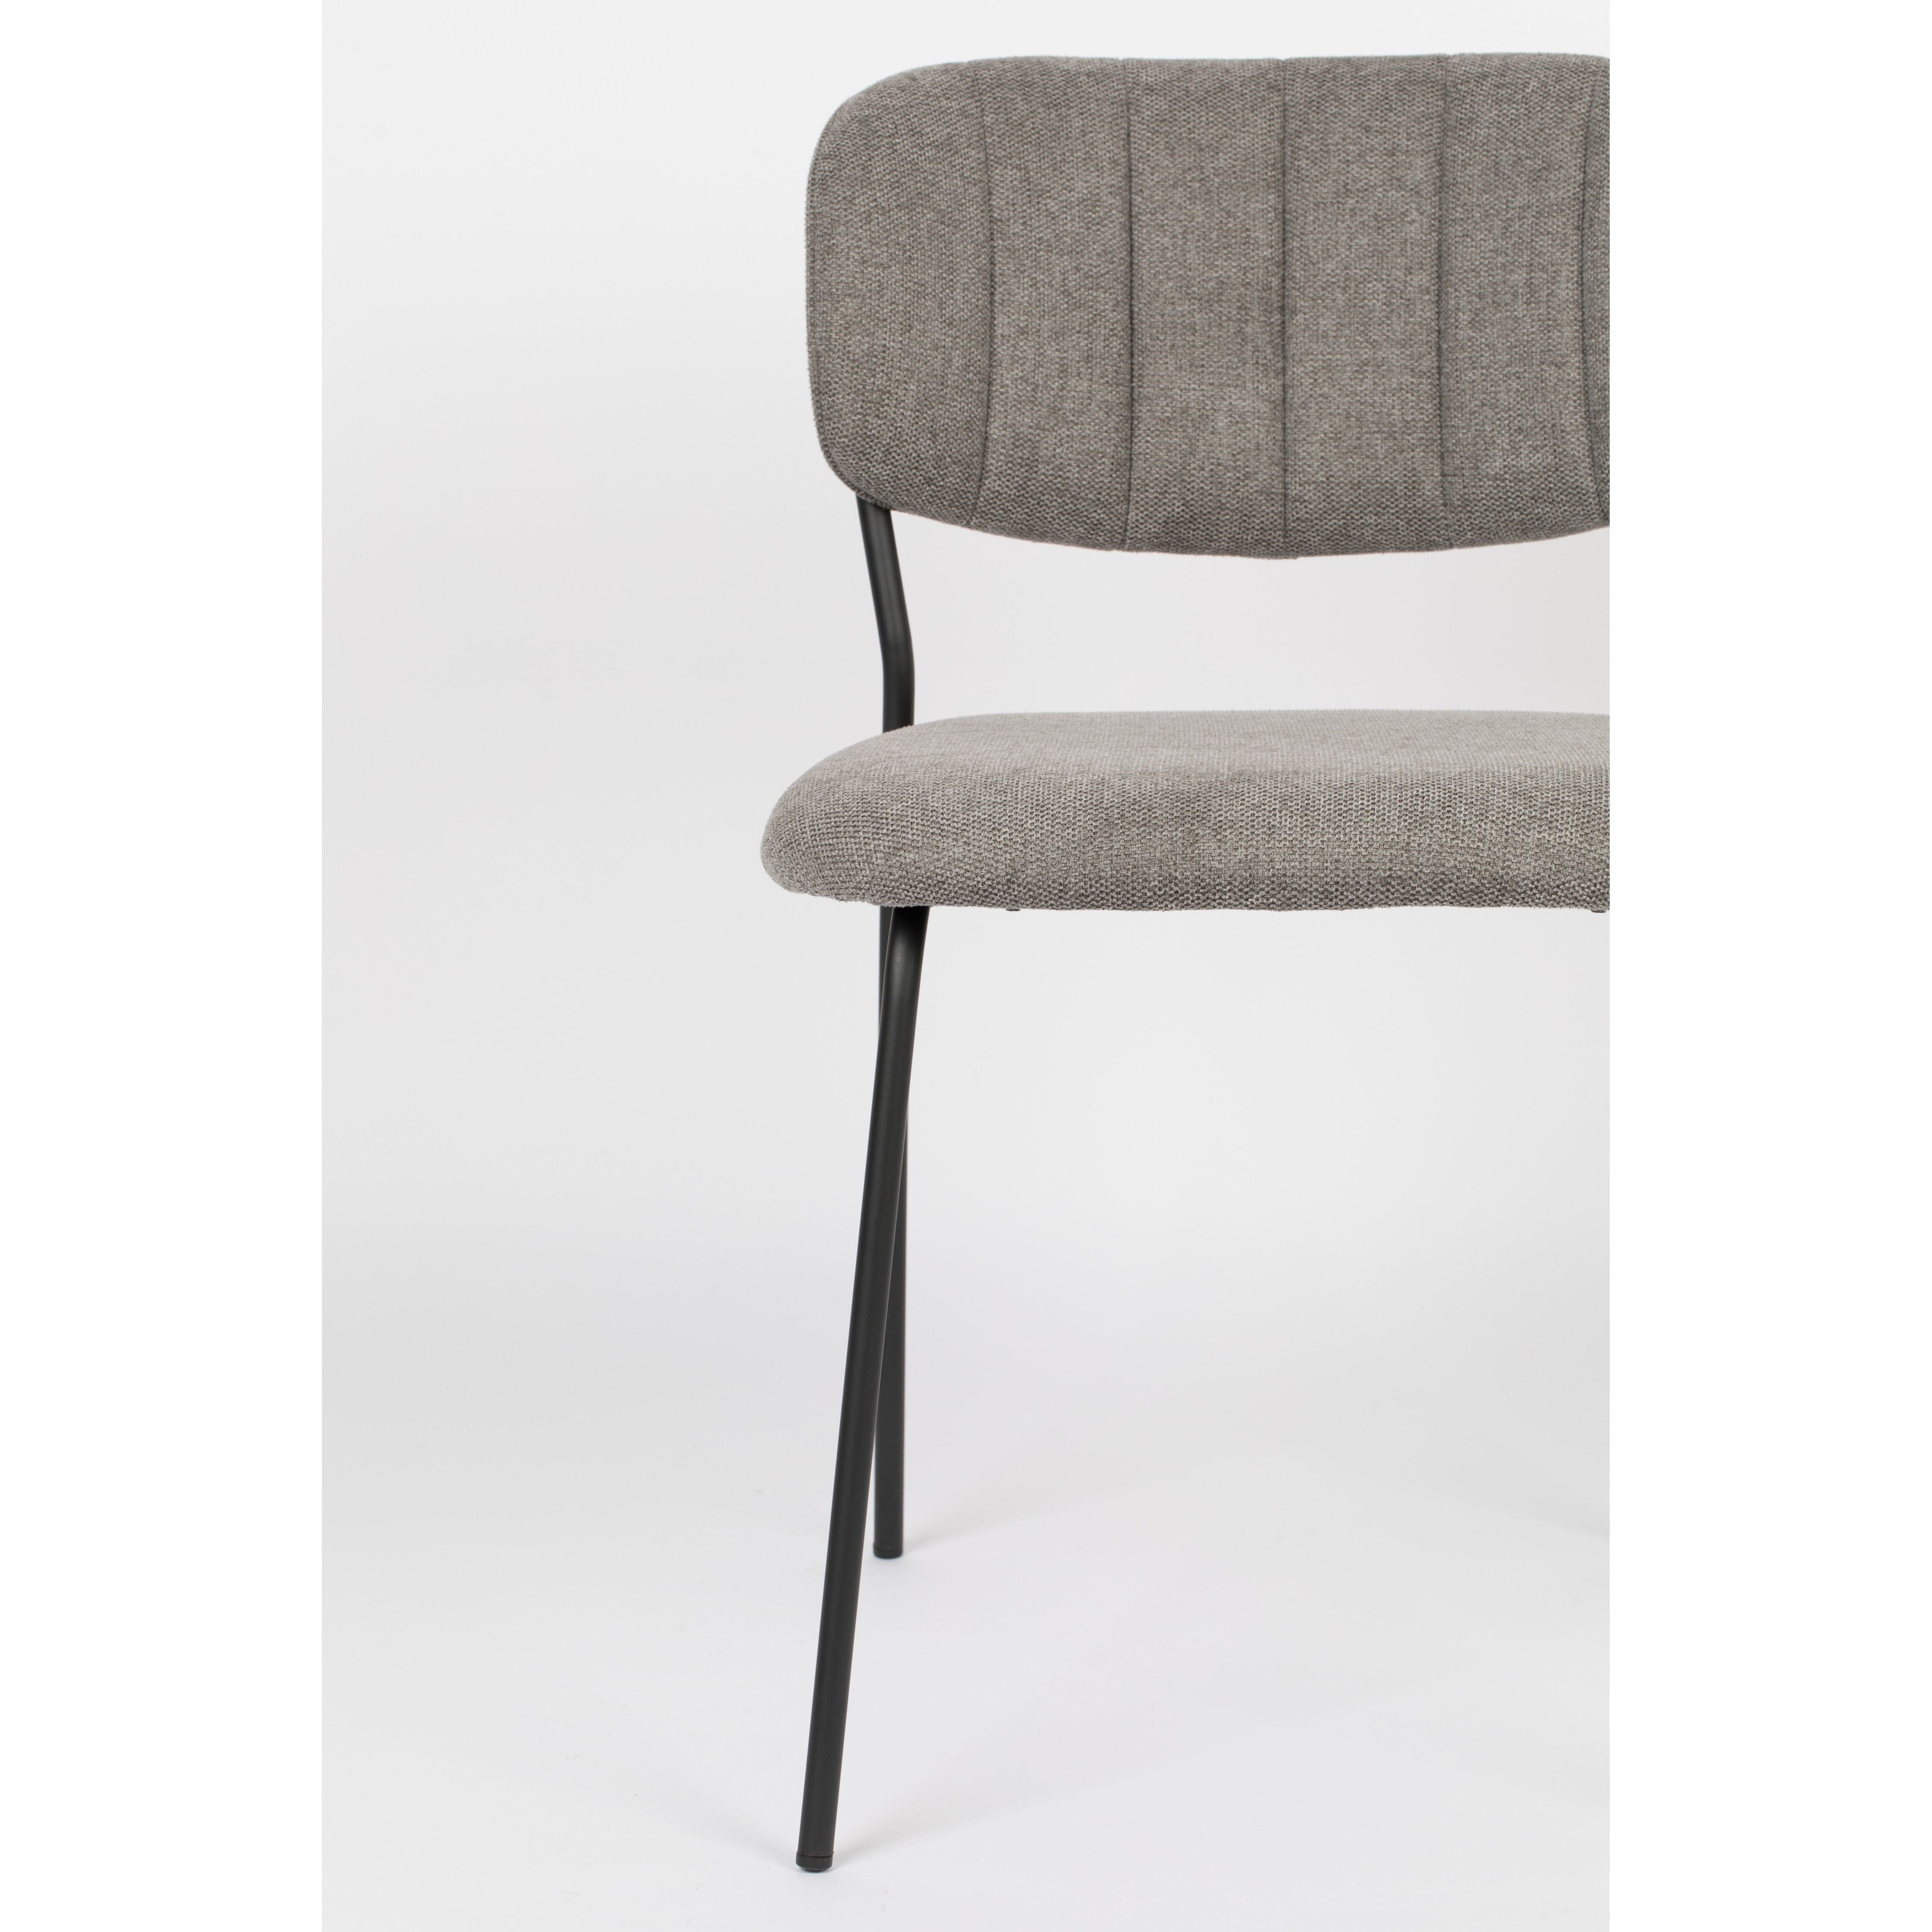 Chair jolien black/grey | 2 pieces